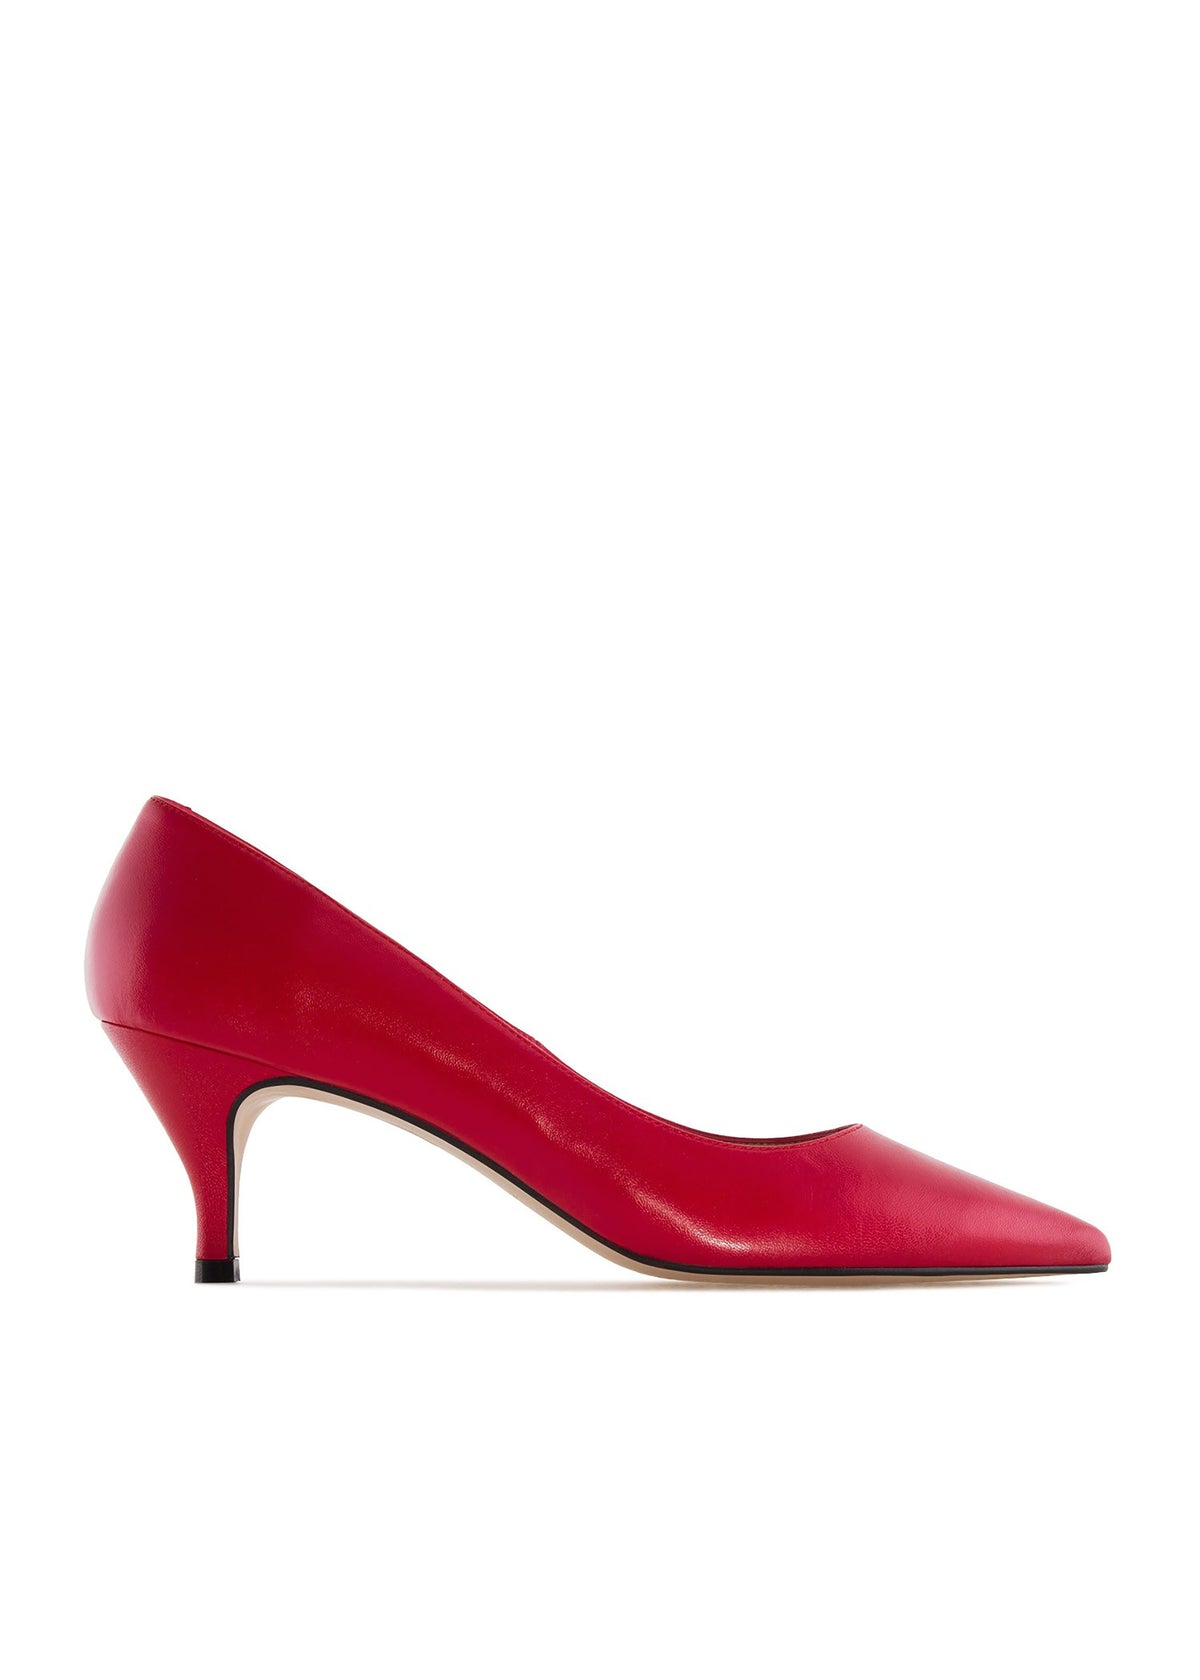 Stiletto heels - Amanda, red leather